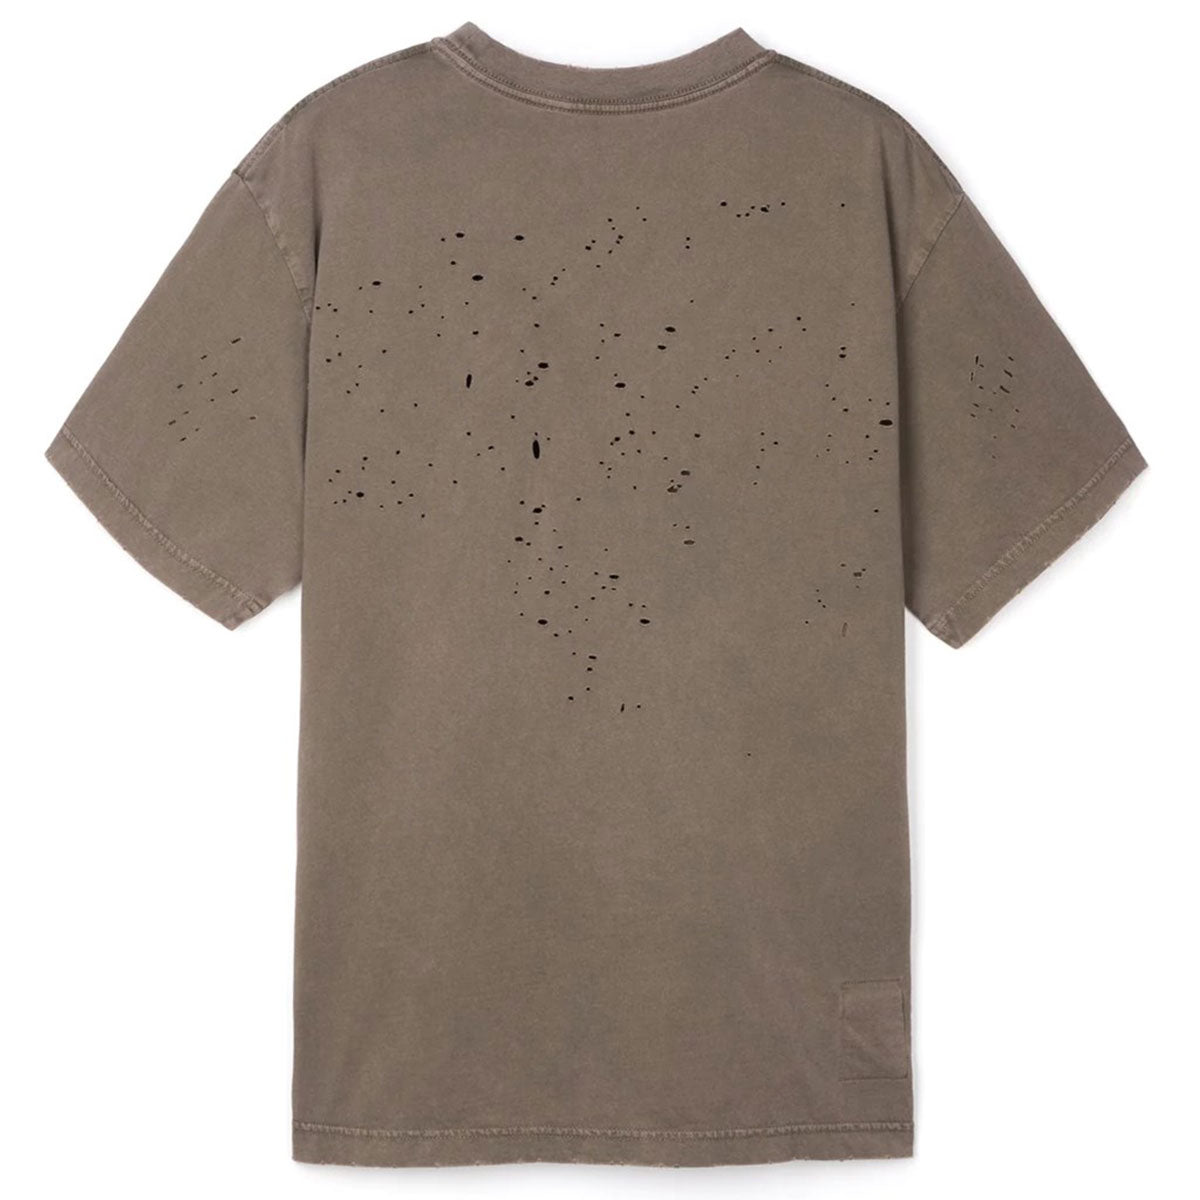 SATISFY MothTech T-Shirt-Aged Brown